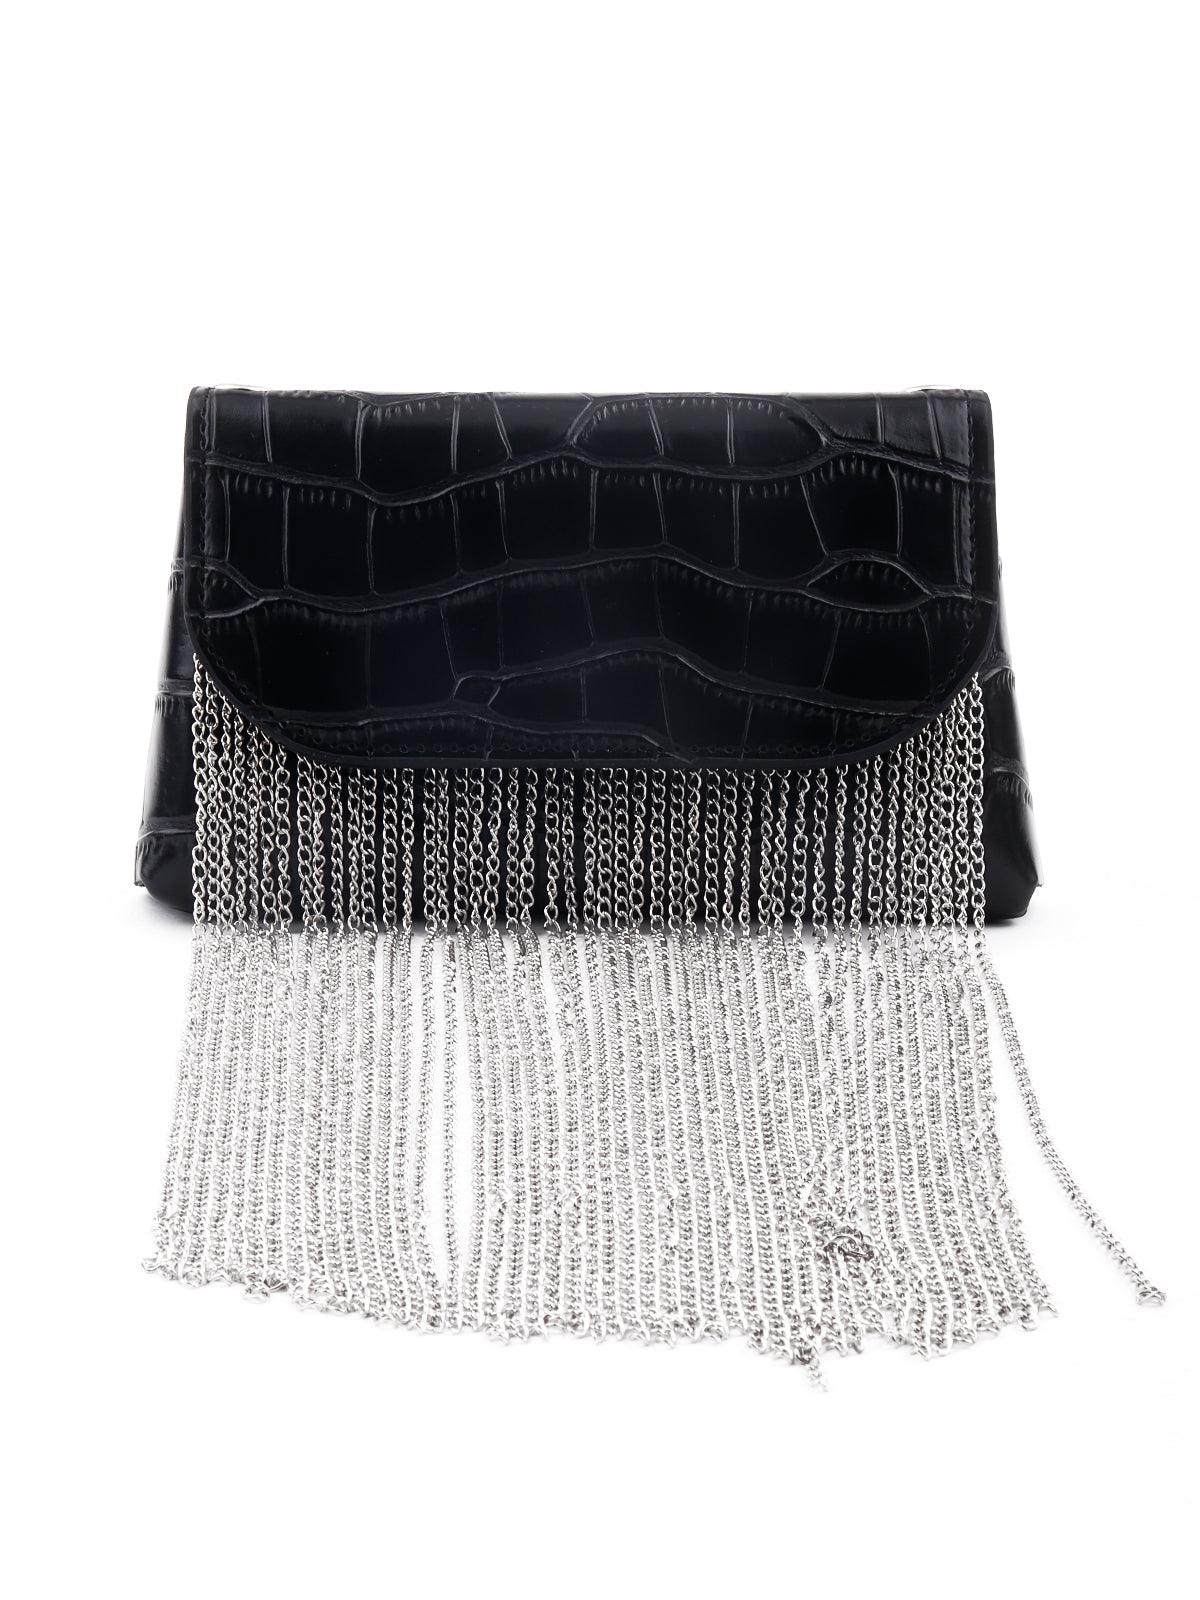 Gorgeous black croc textured tassel bag for women - Odette